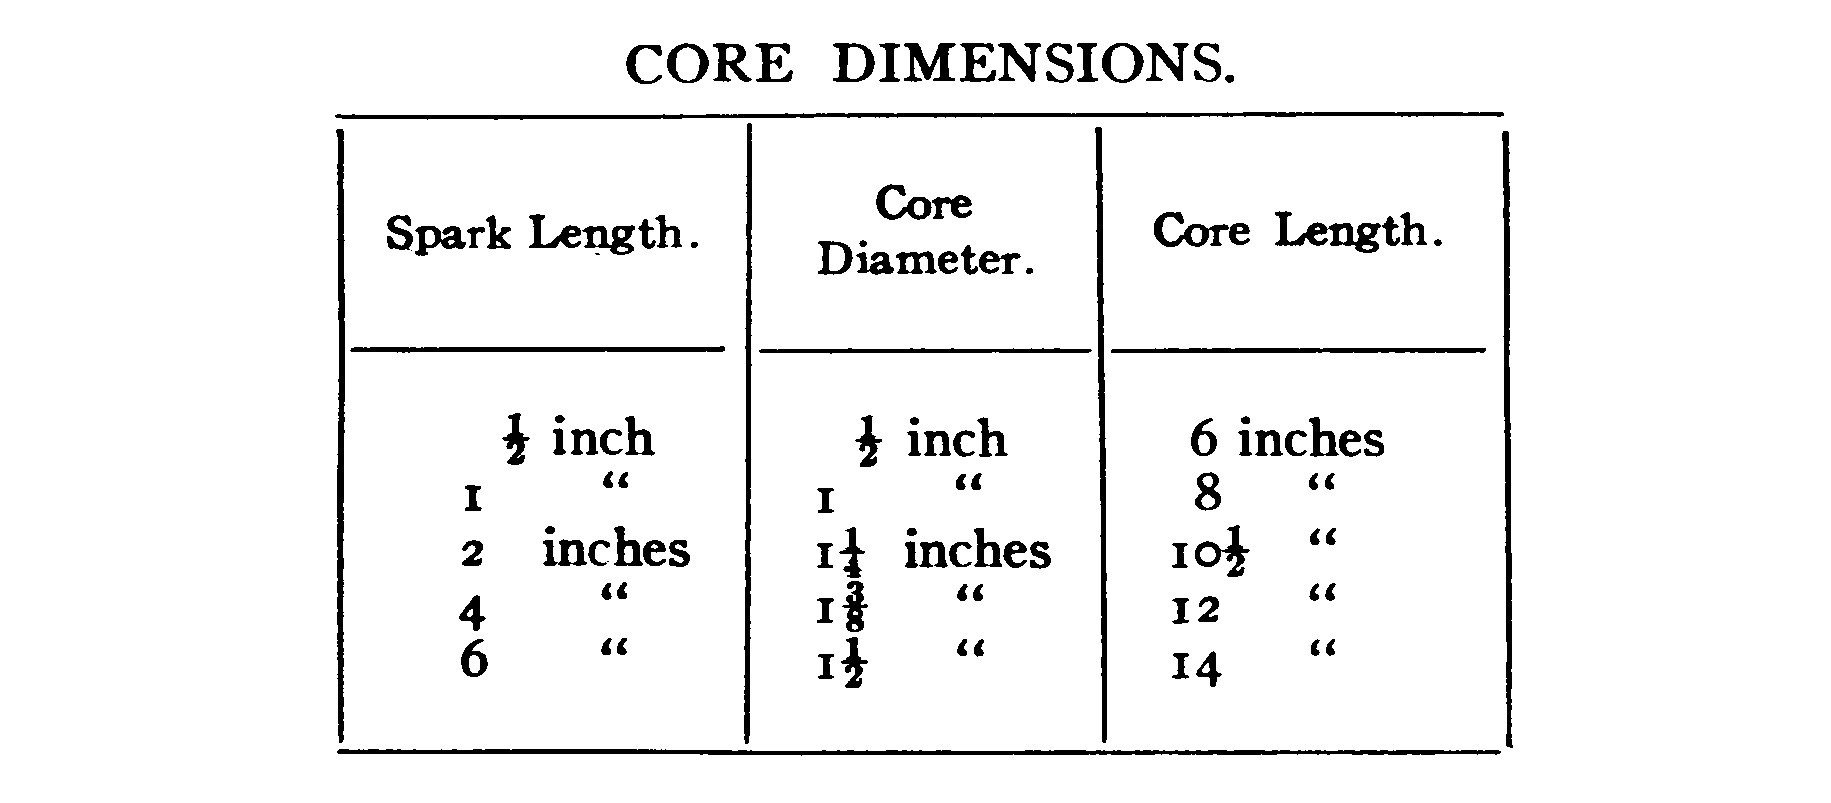 Core Dimensions Table.